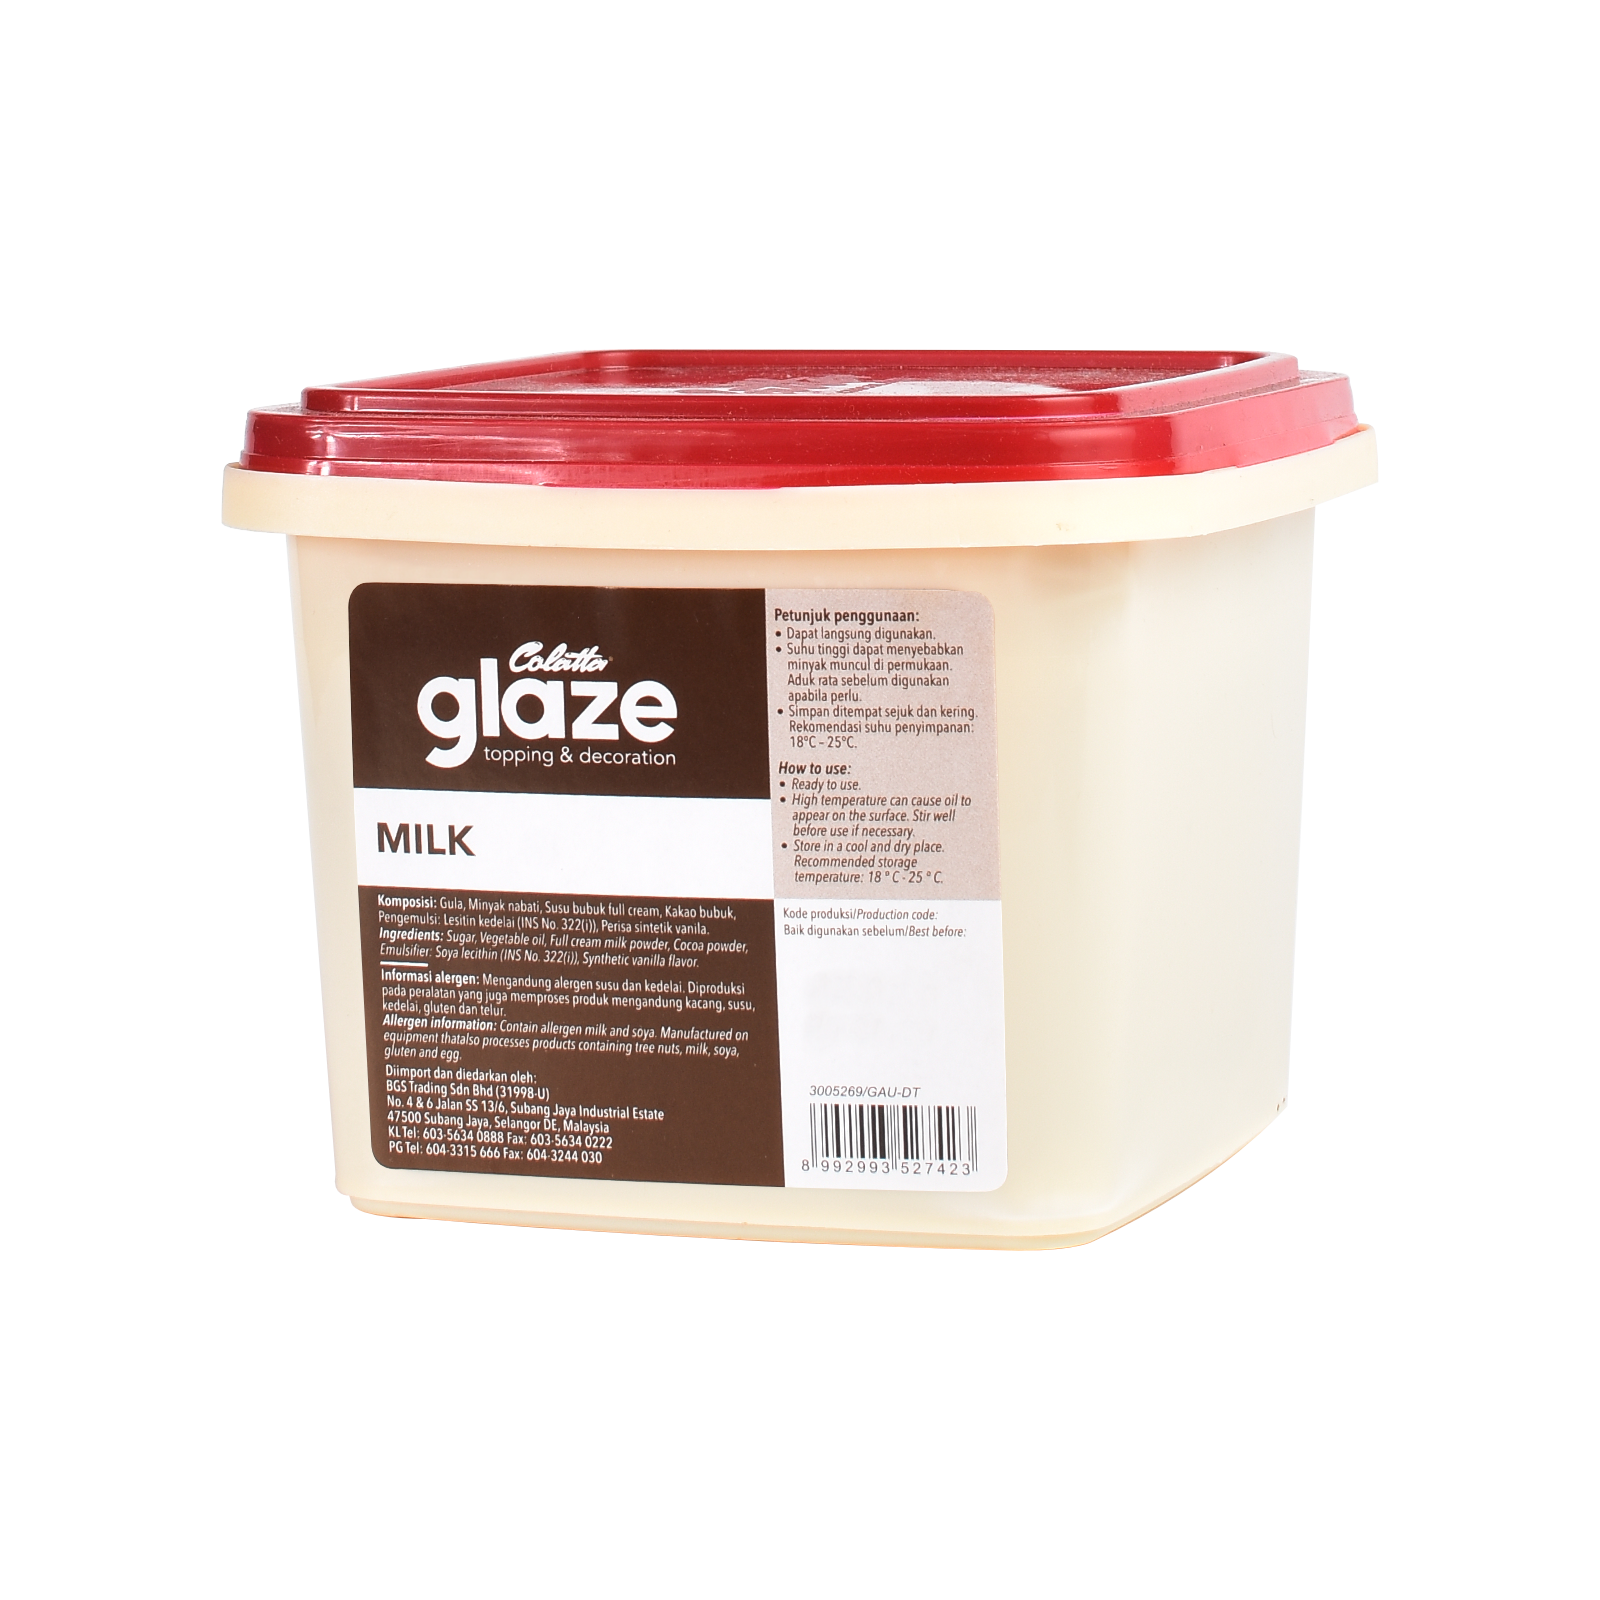 colatta glaze milk.png